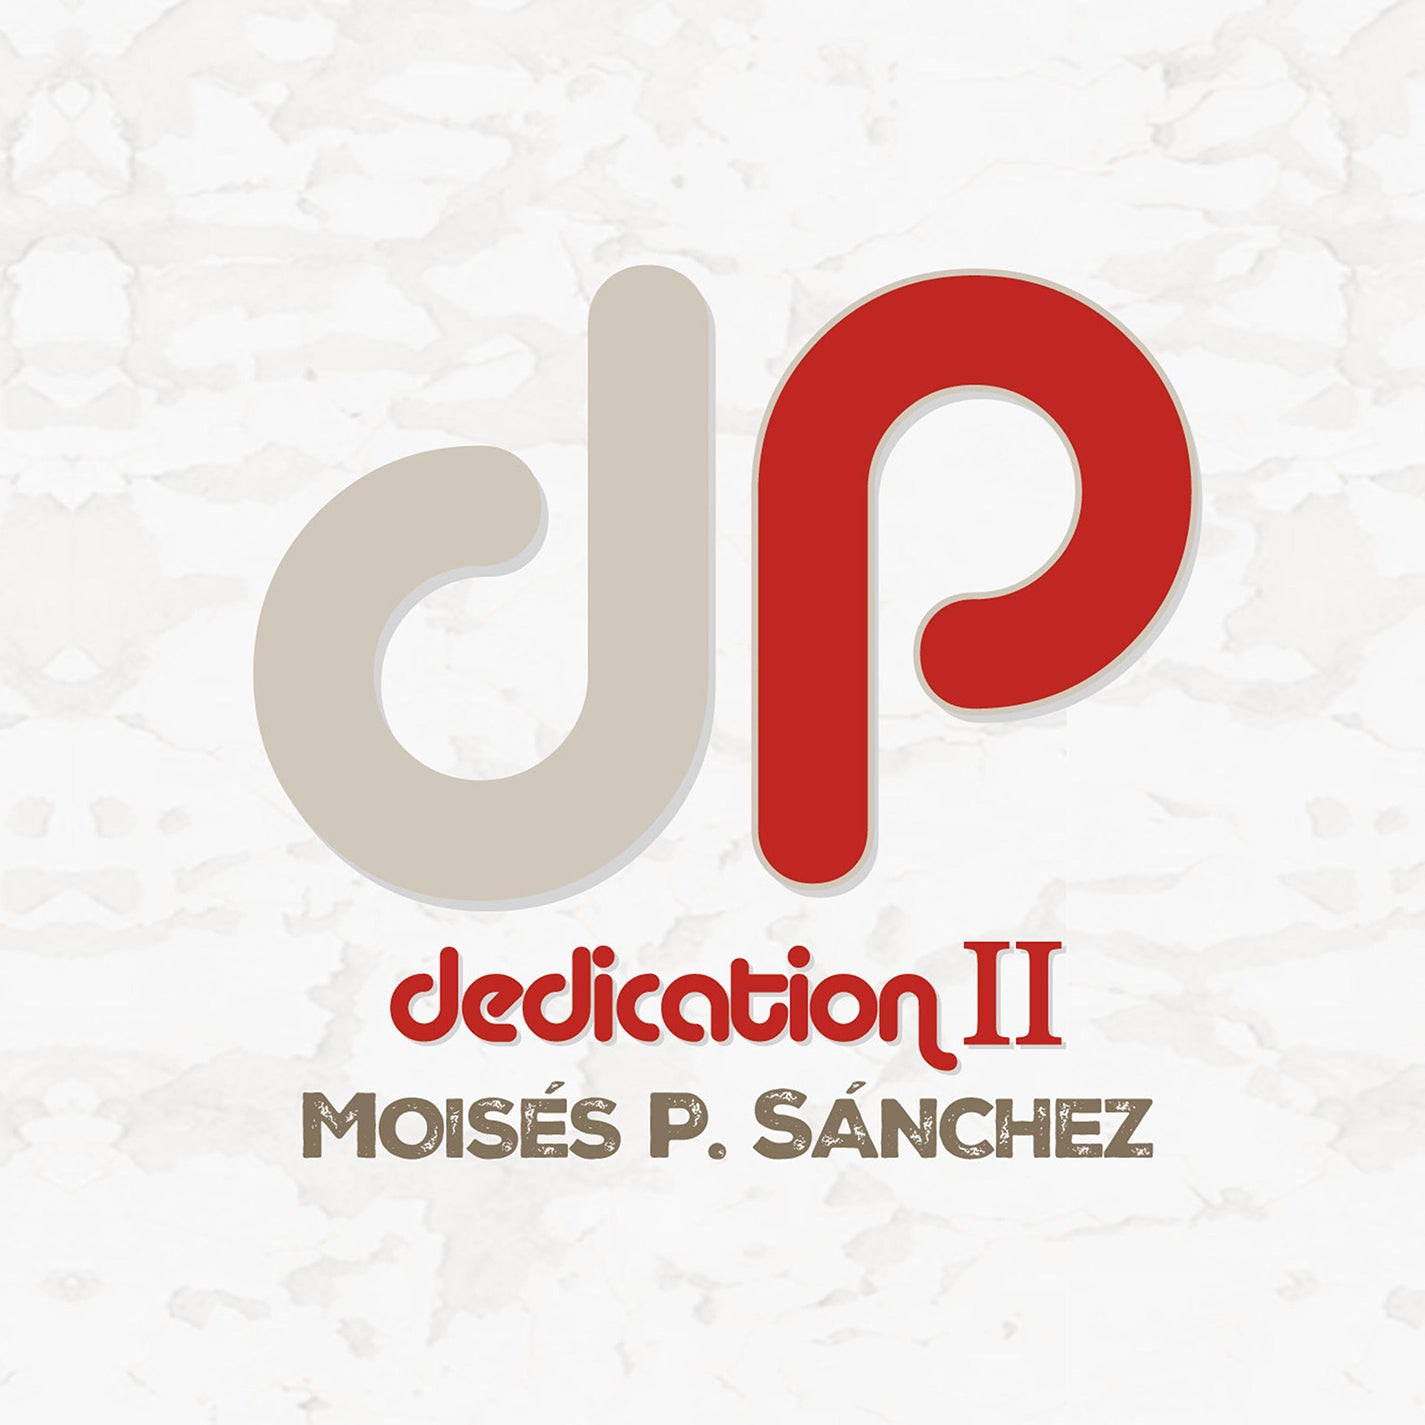 Dedication II / Moises P. Sánchez